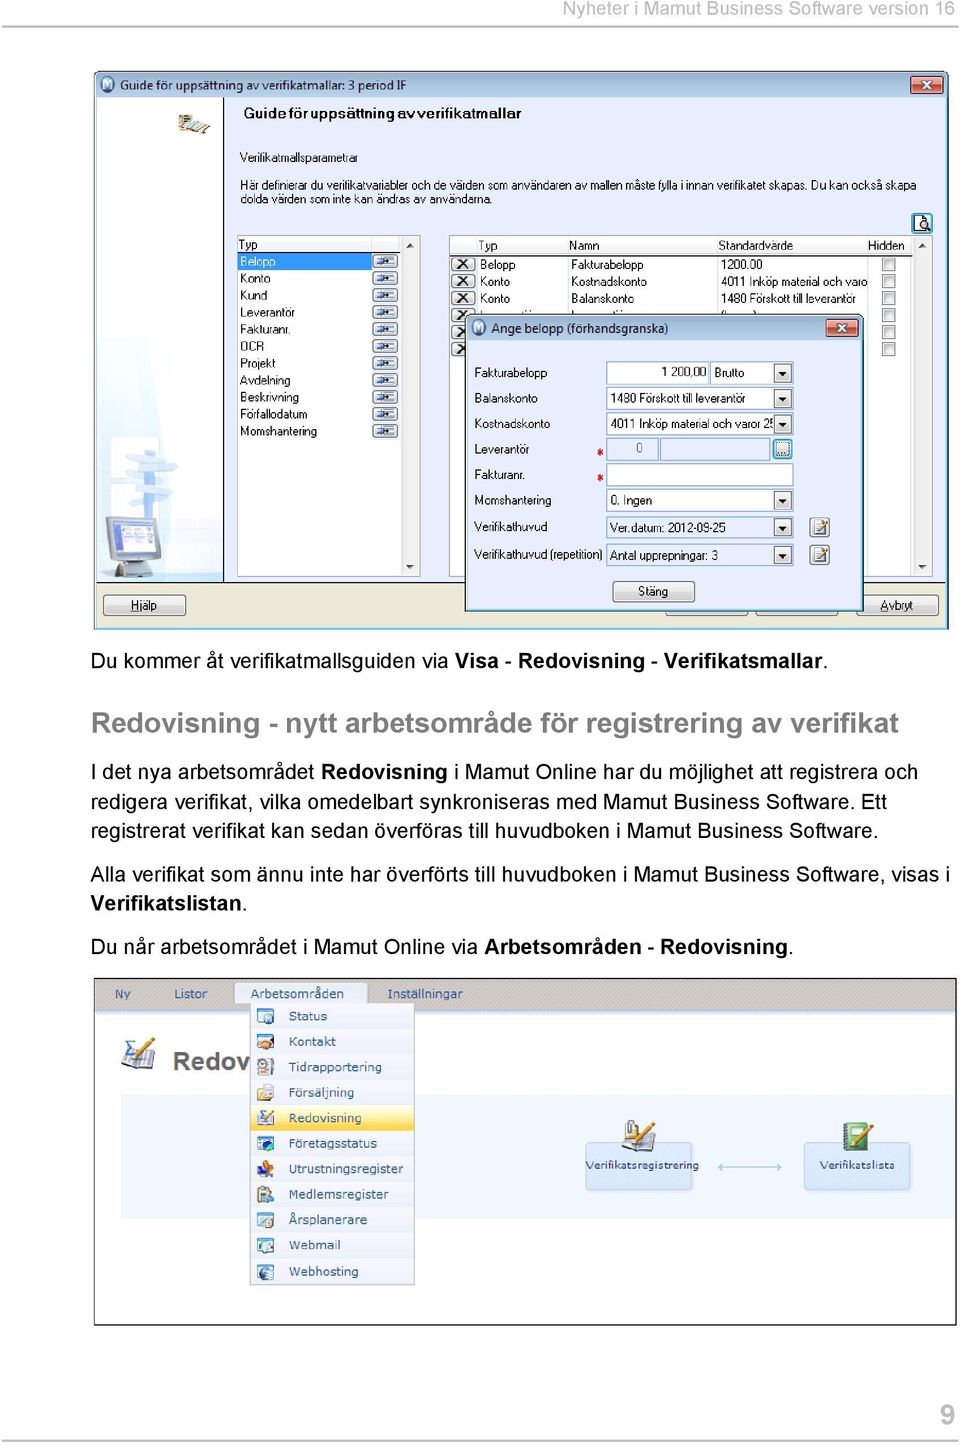 redigera verifikat, vilka omedelbart synkroniseras med Mamut Business Software.